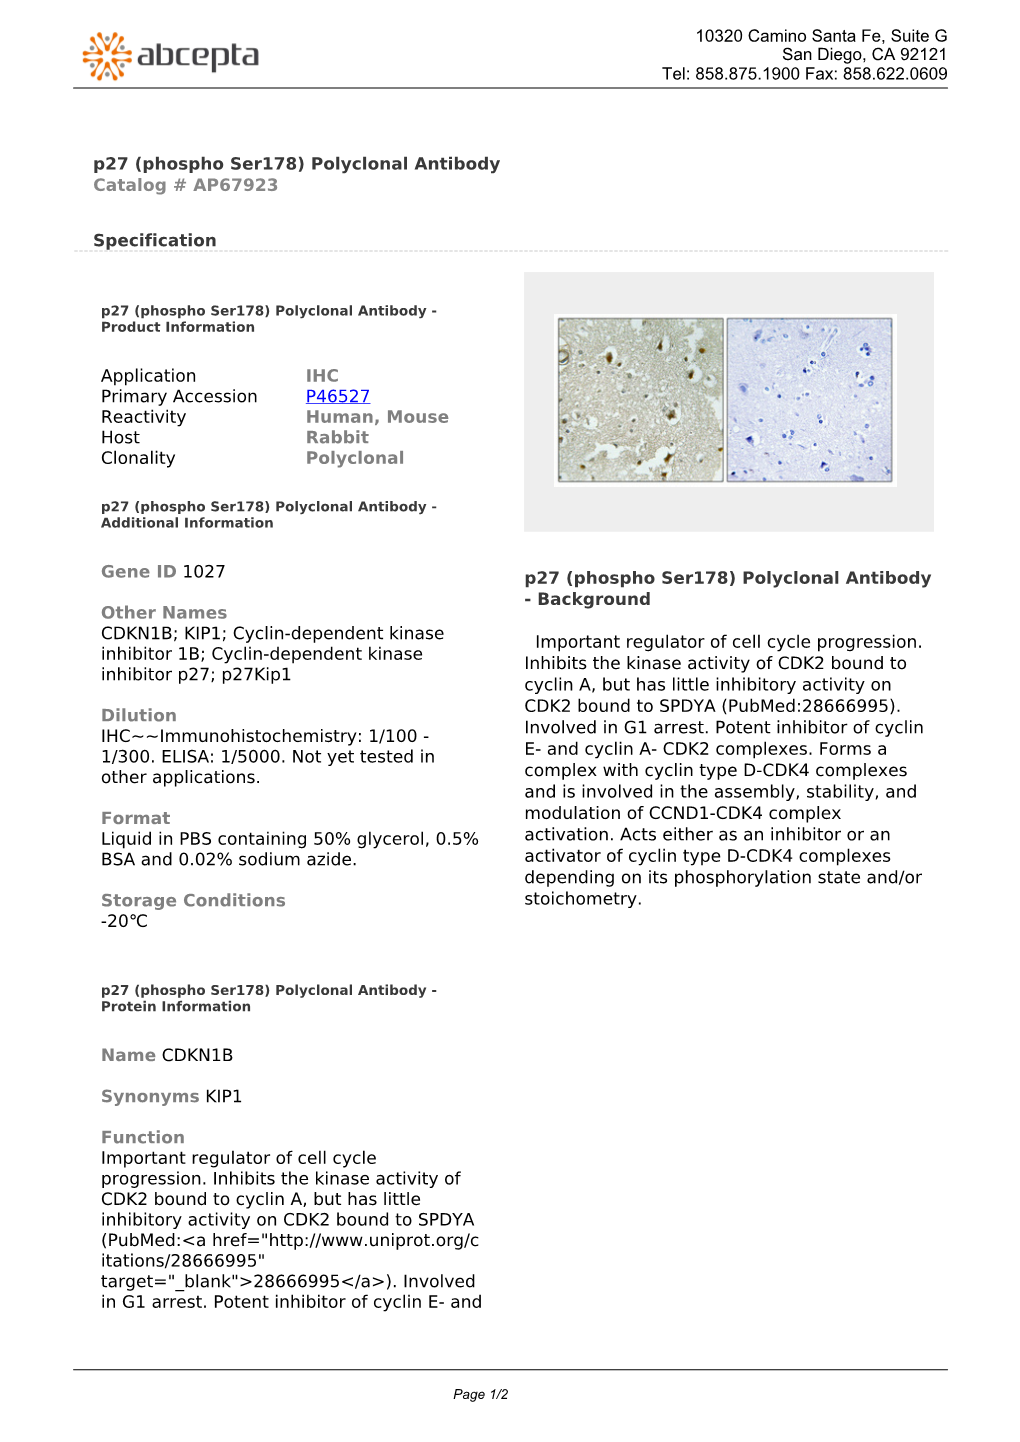 P27 (Phospho Ser178) Polyclonal Antibody Catalog # AP67923